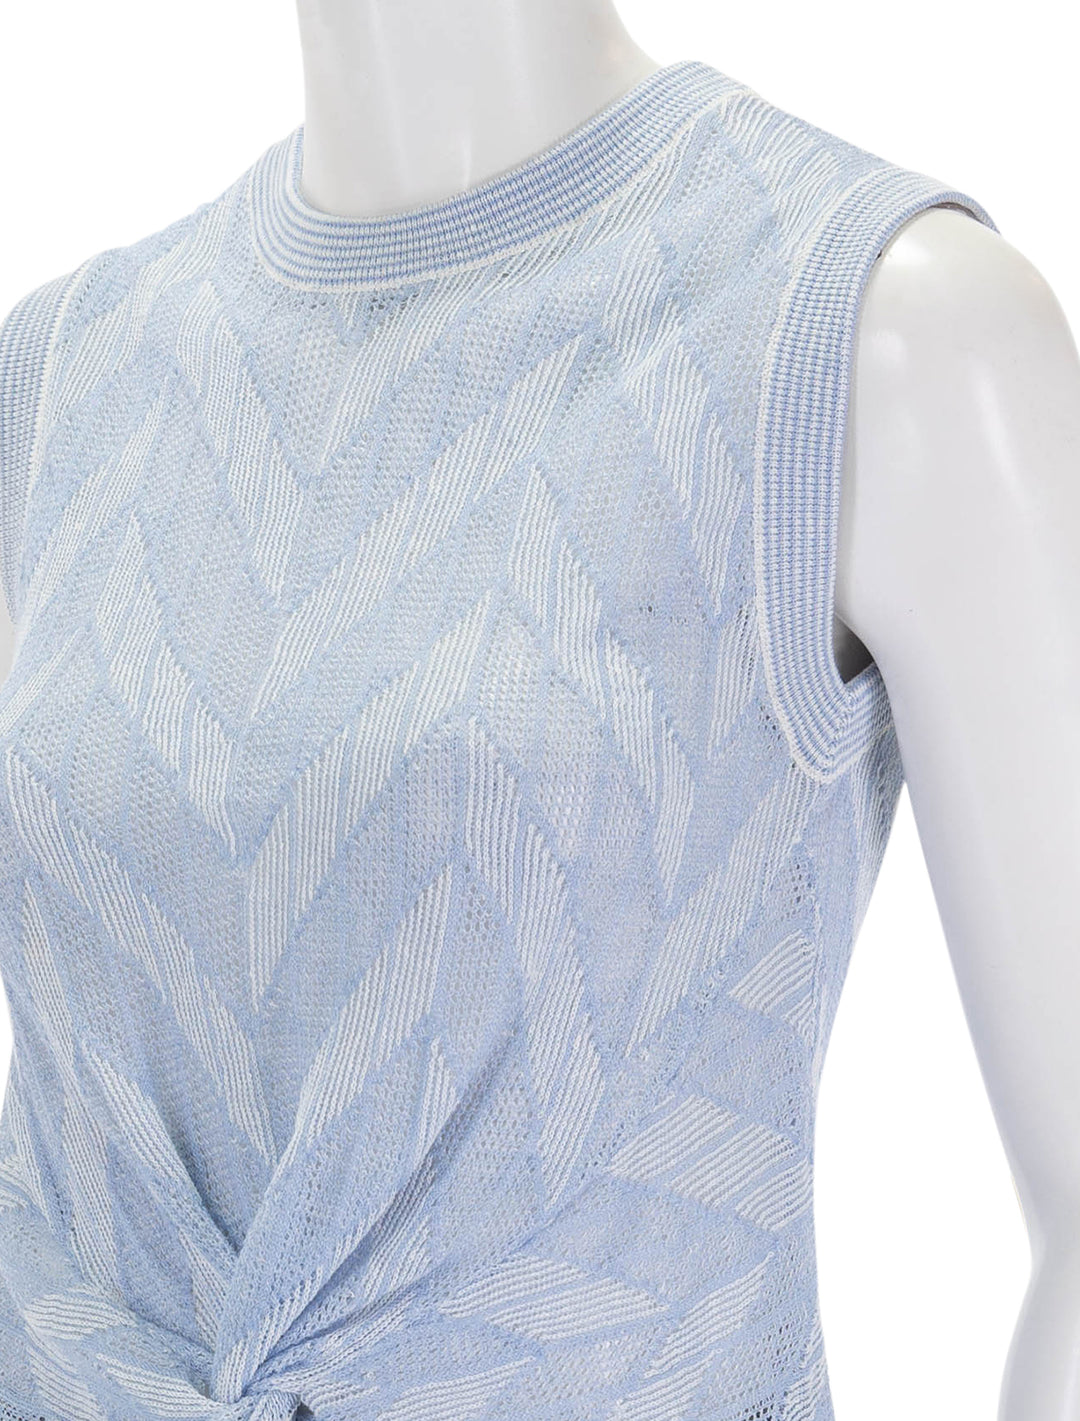 Close-up view of Veronica Beard's kellen sweater in light blue.